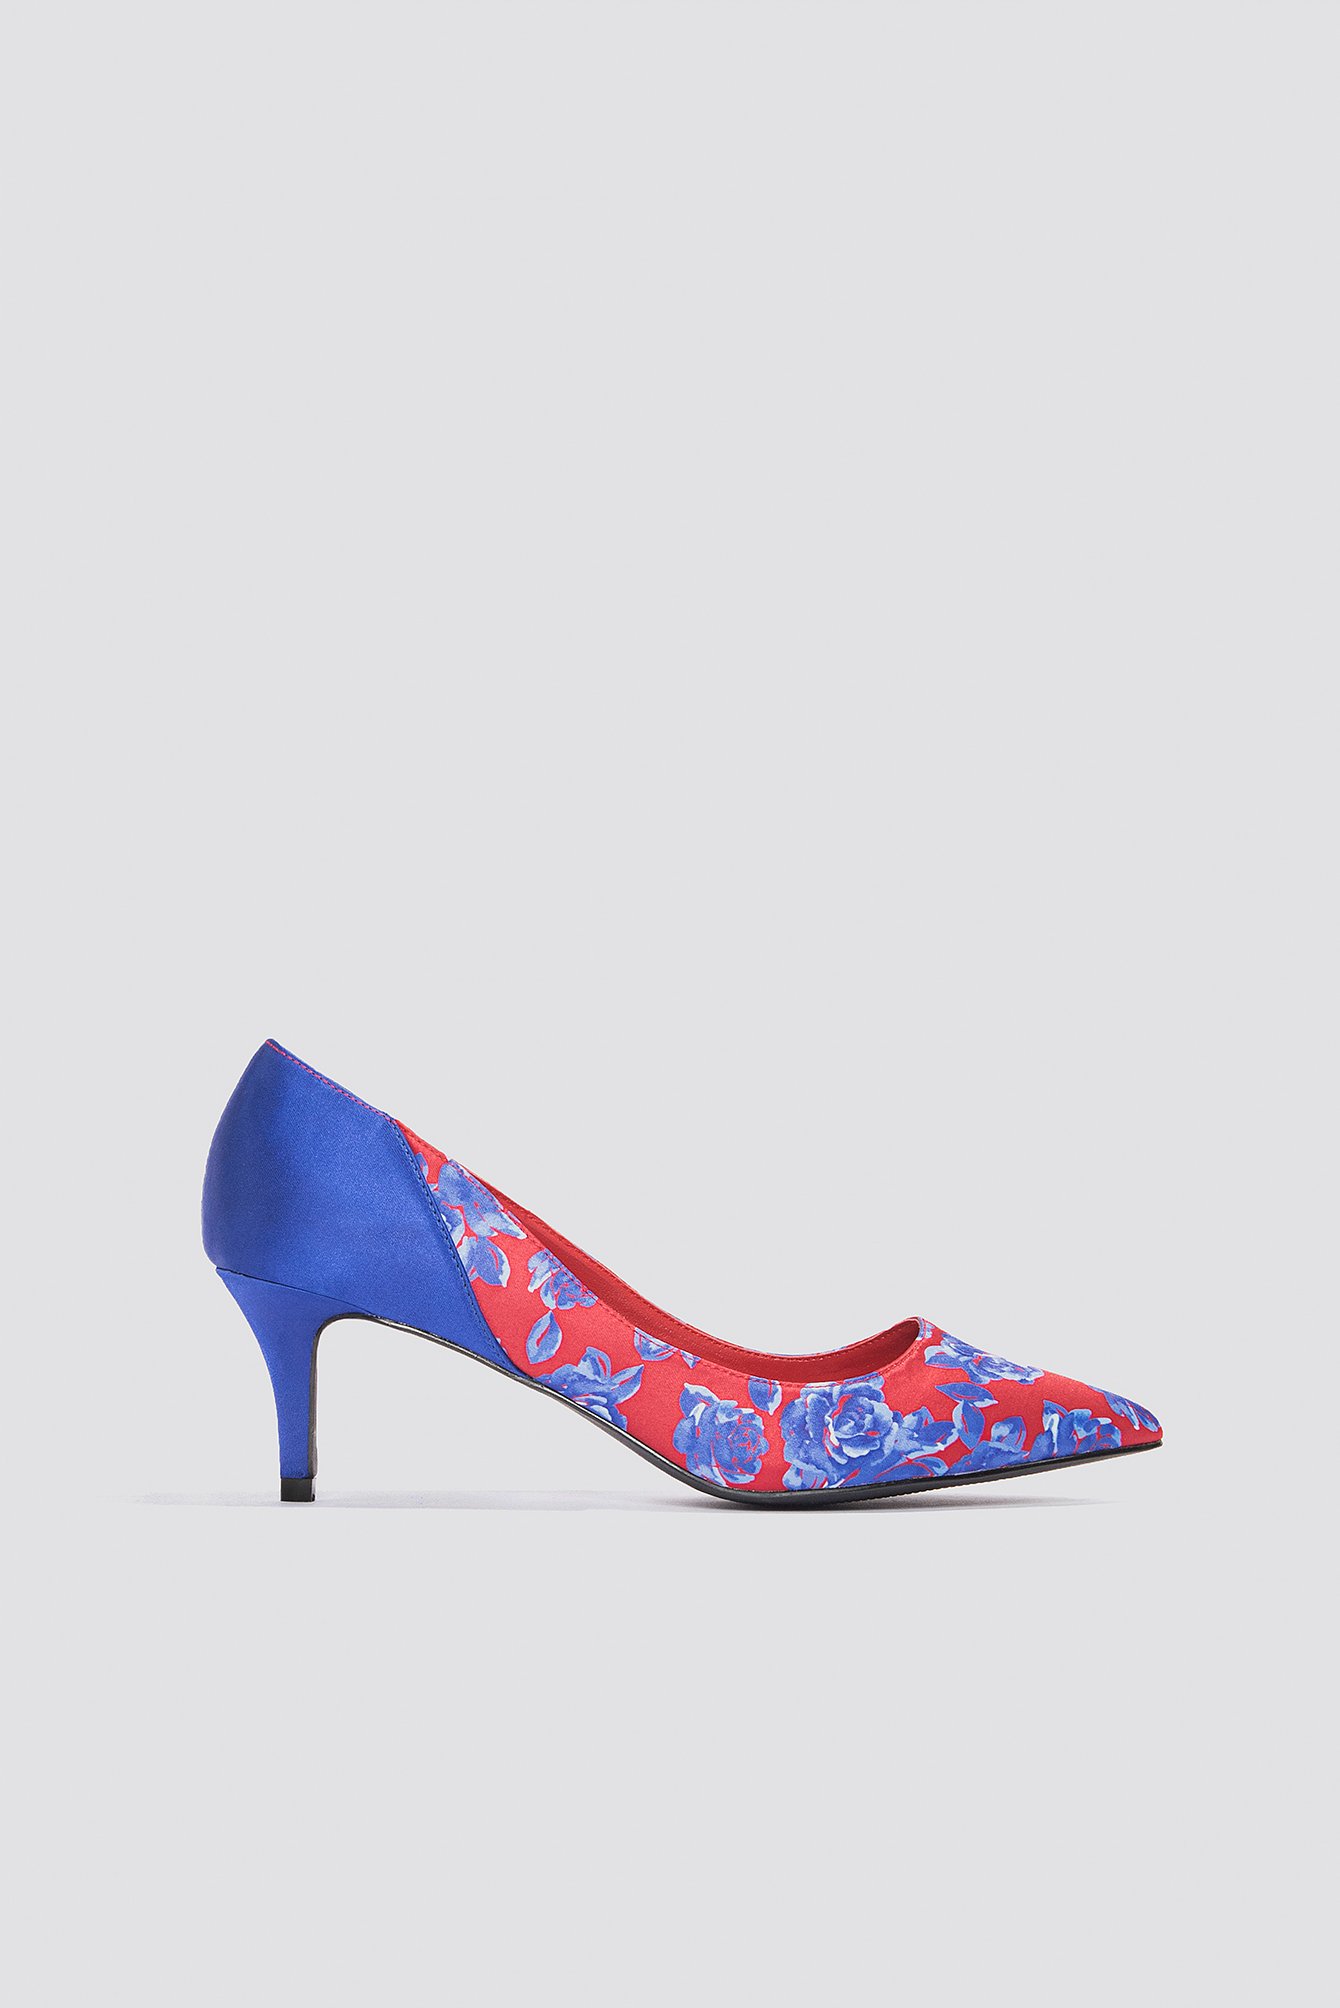 NA-KD Shoes Block Mid Heel Satin Pumps - Red,Blue,Multicolor